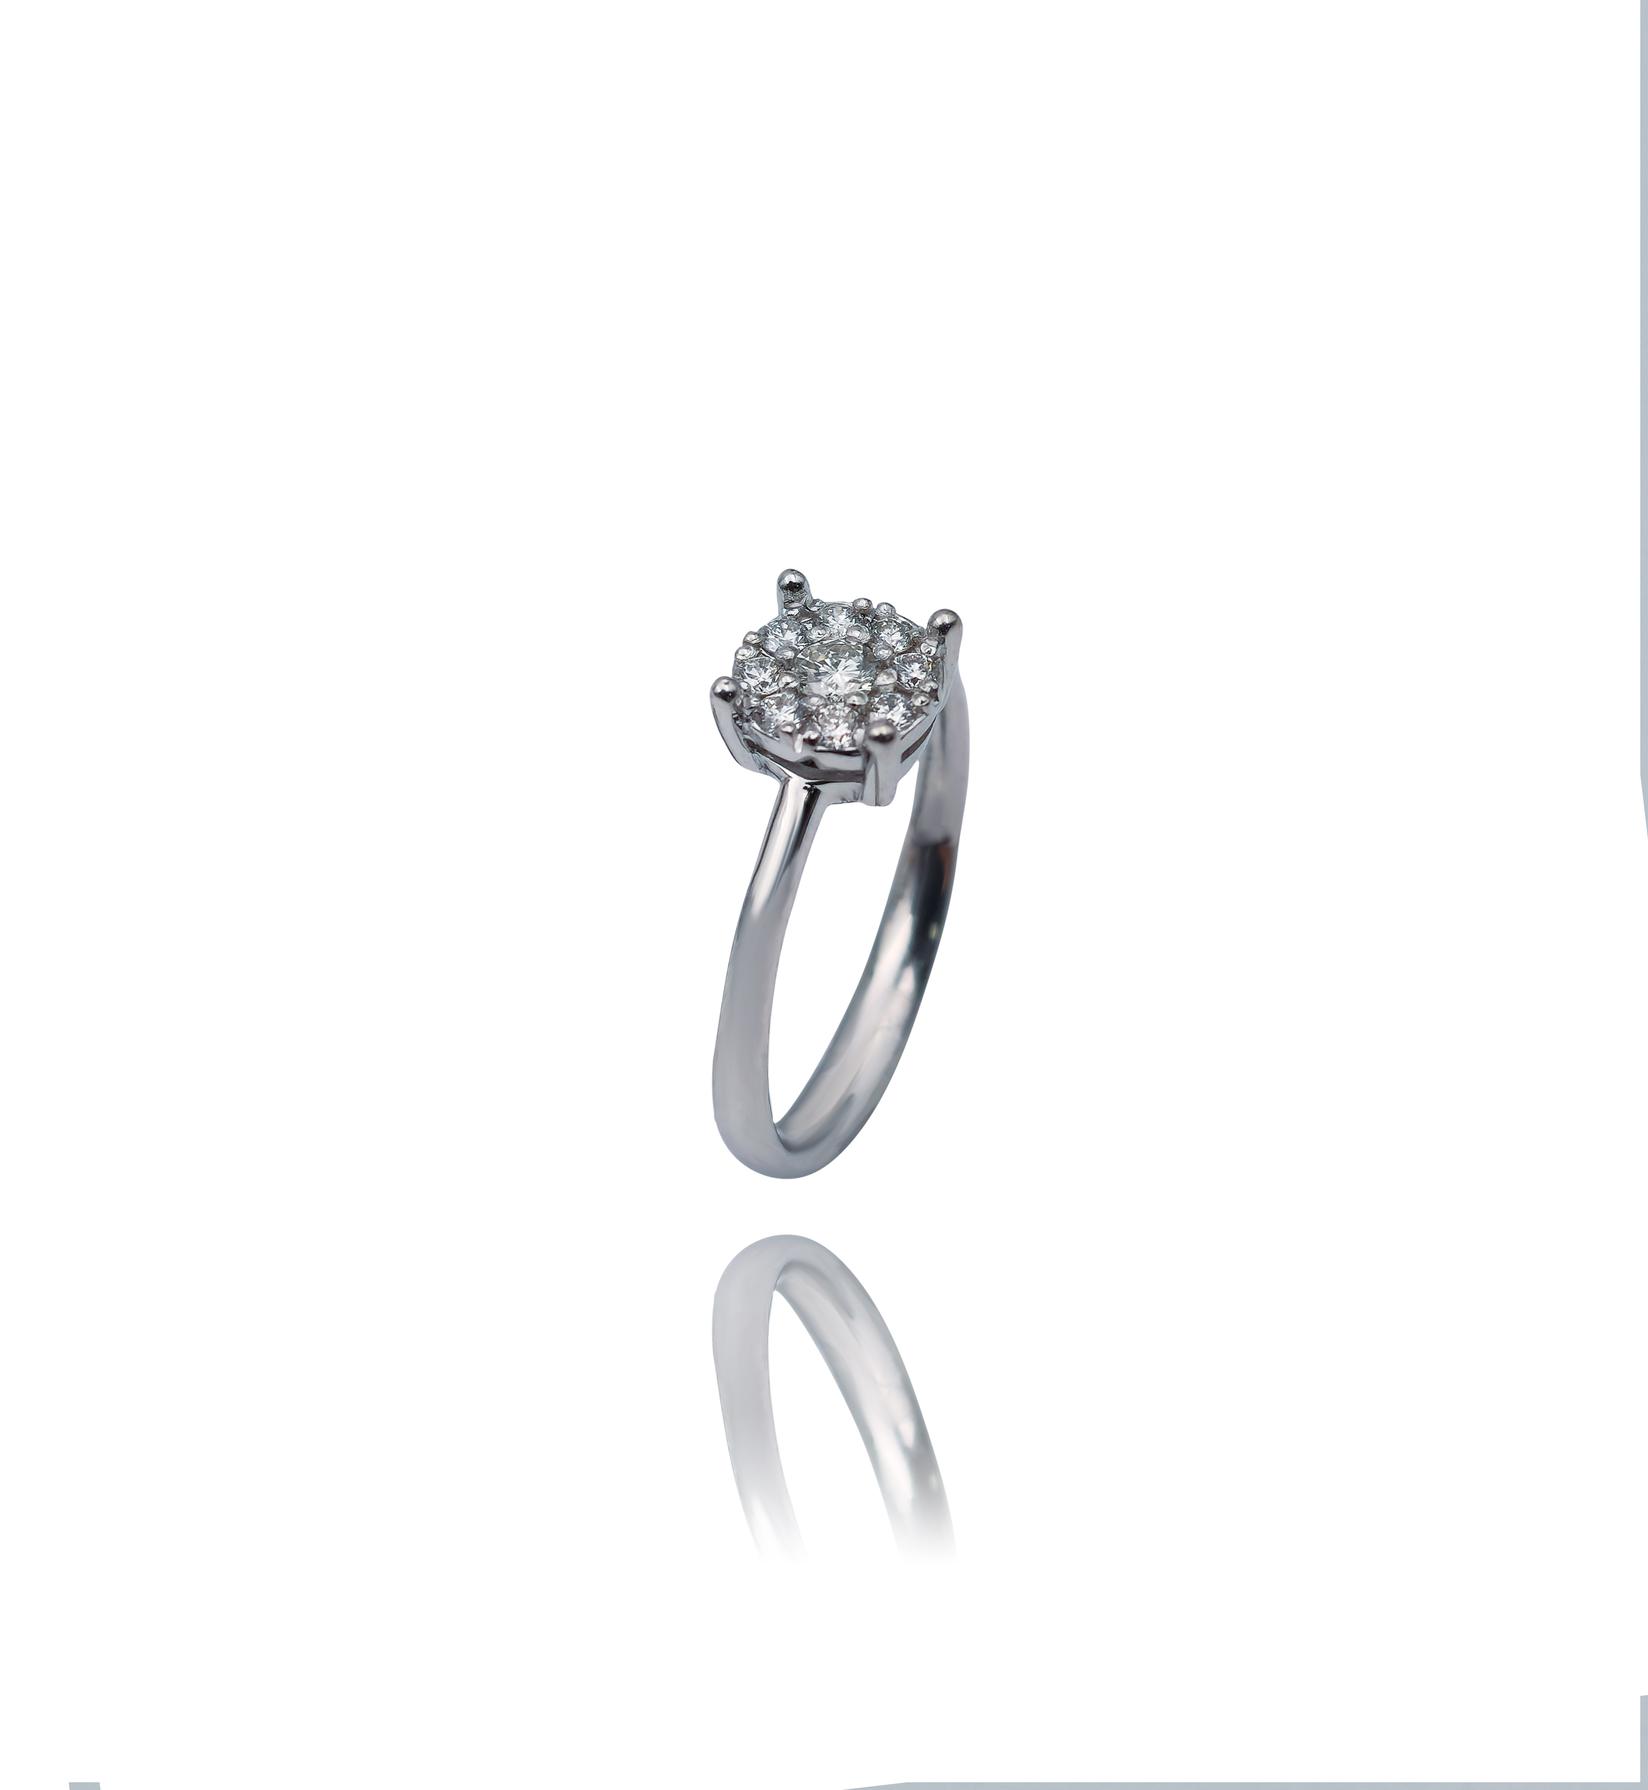 Selected image for Ženski prsten od Belog zlata sa Brilijantima, 585, 17mm